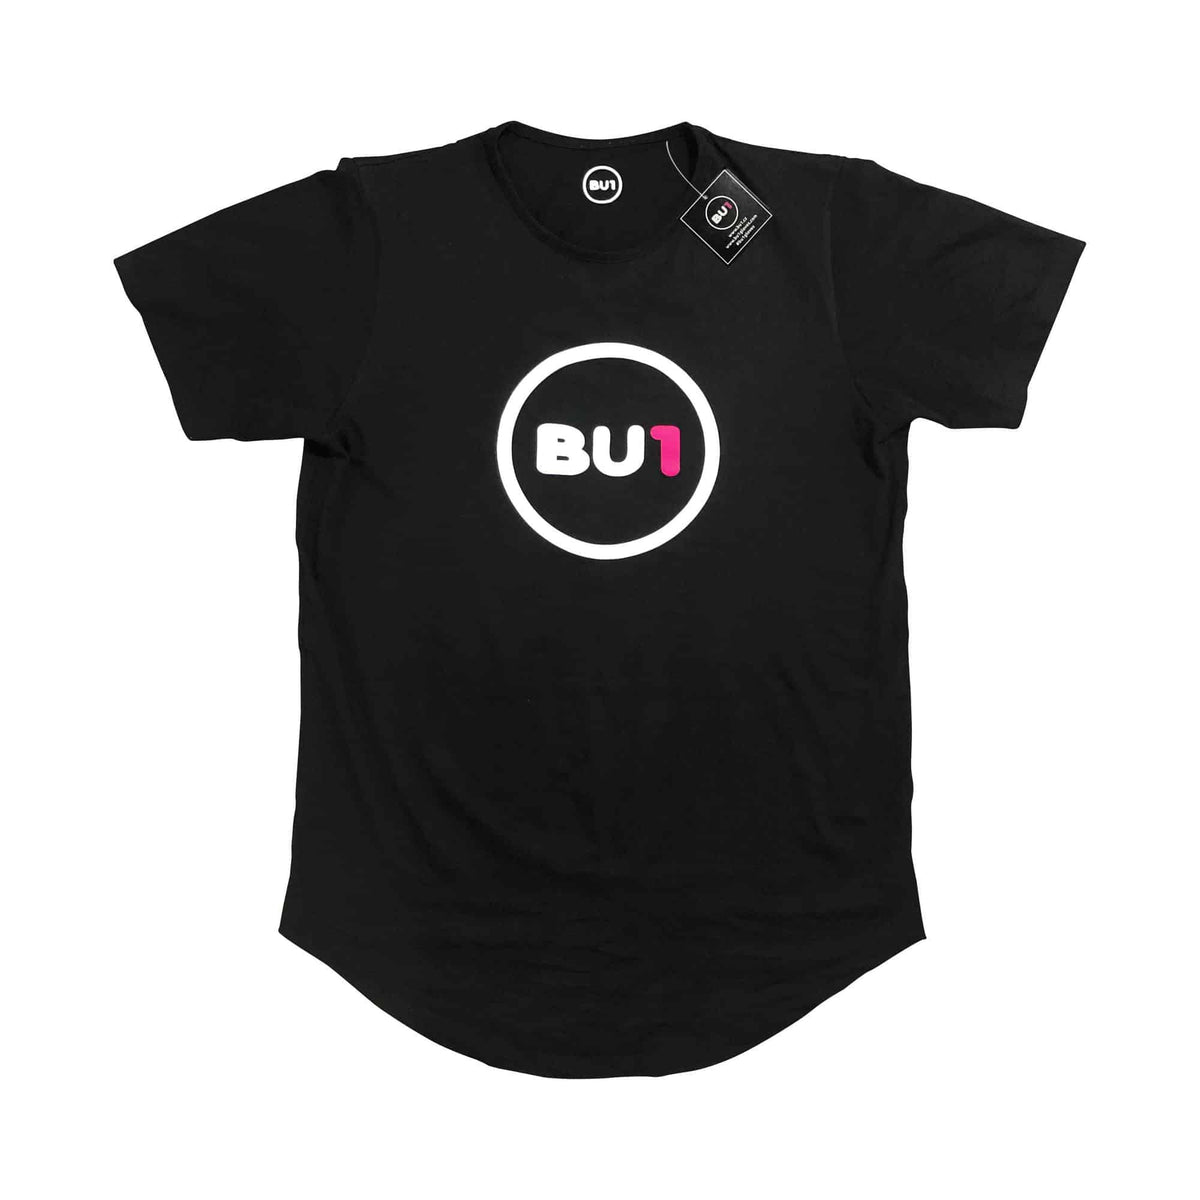 Camiseta BU1 negra